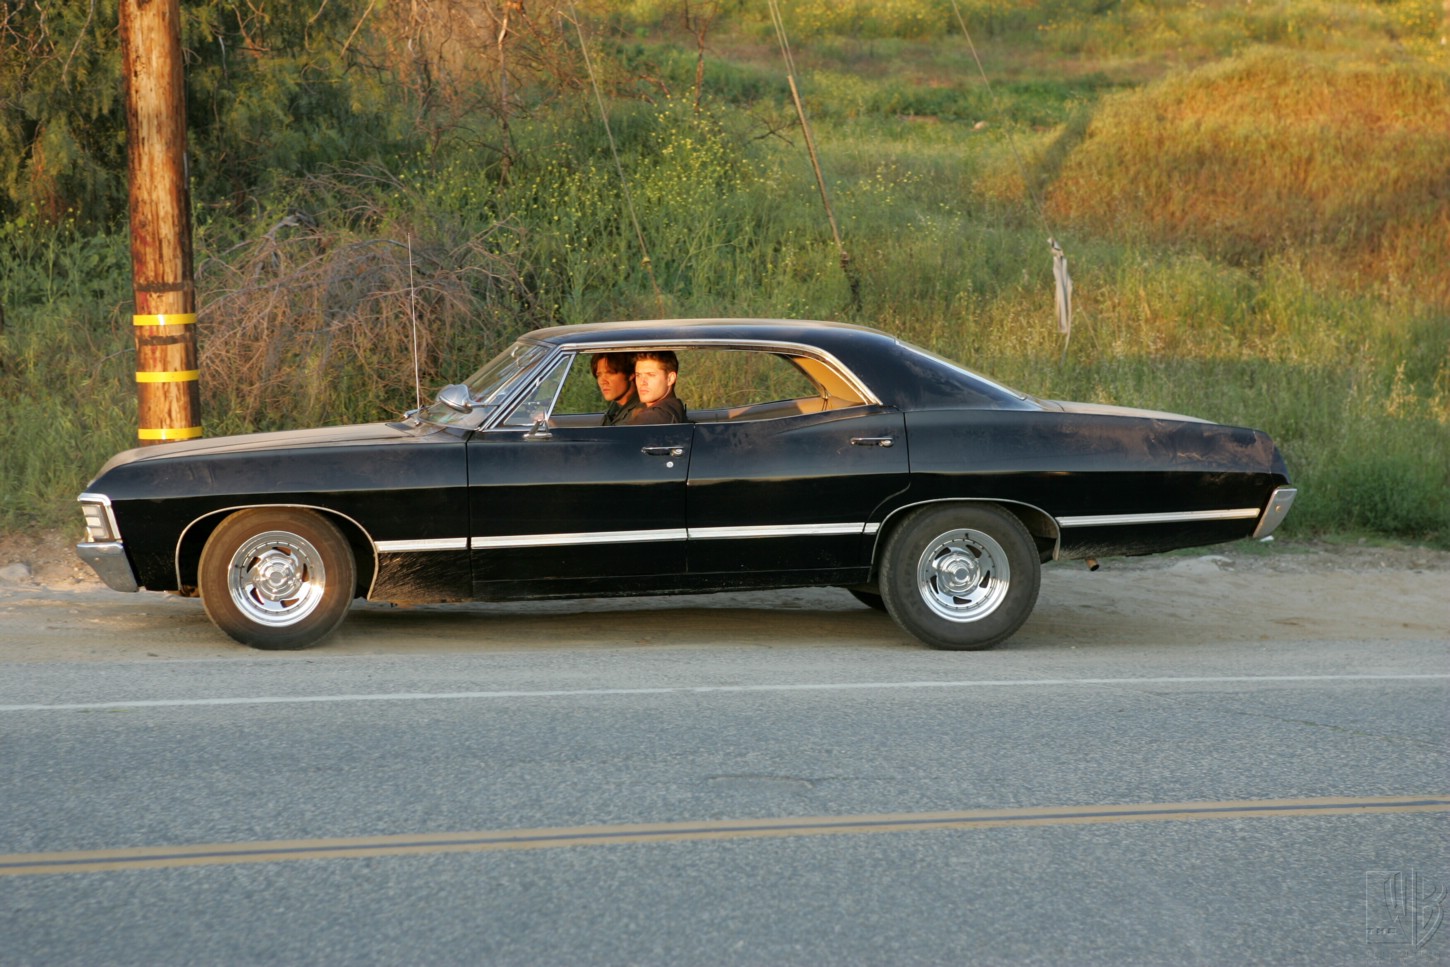 1967 Chevy Impala Supernatural, chevrolet impala 1967 hd wallpaper ...